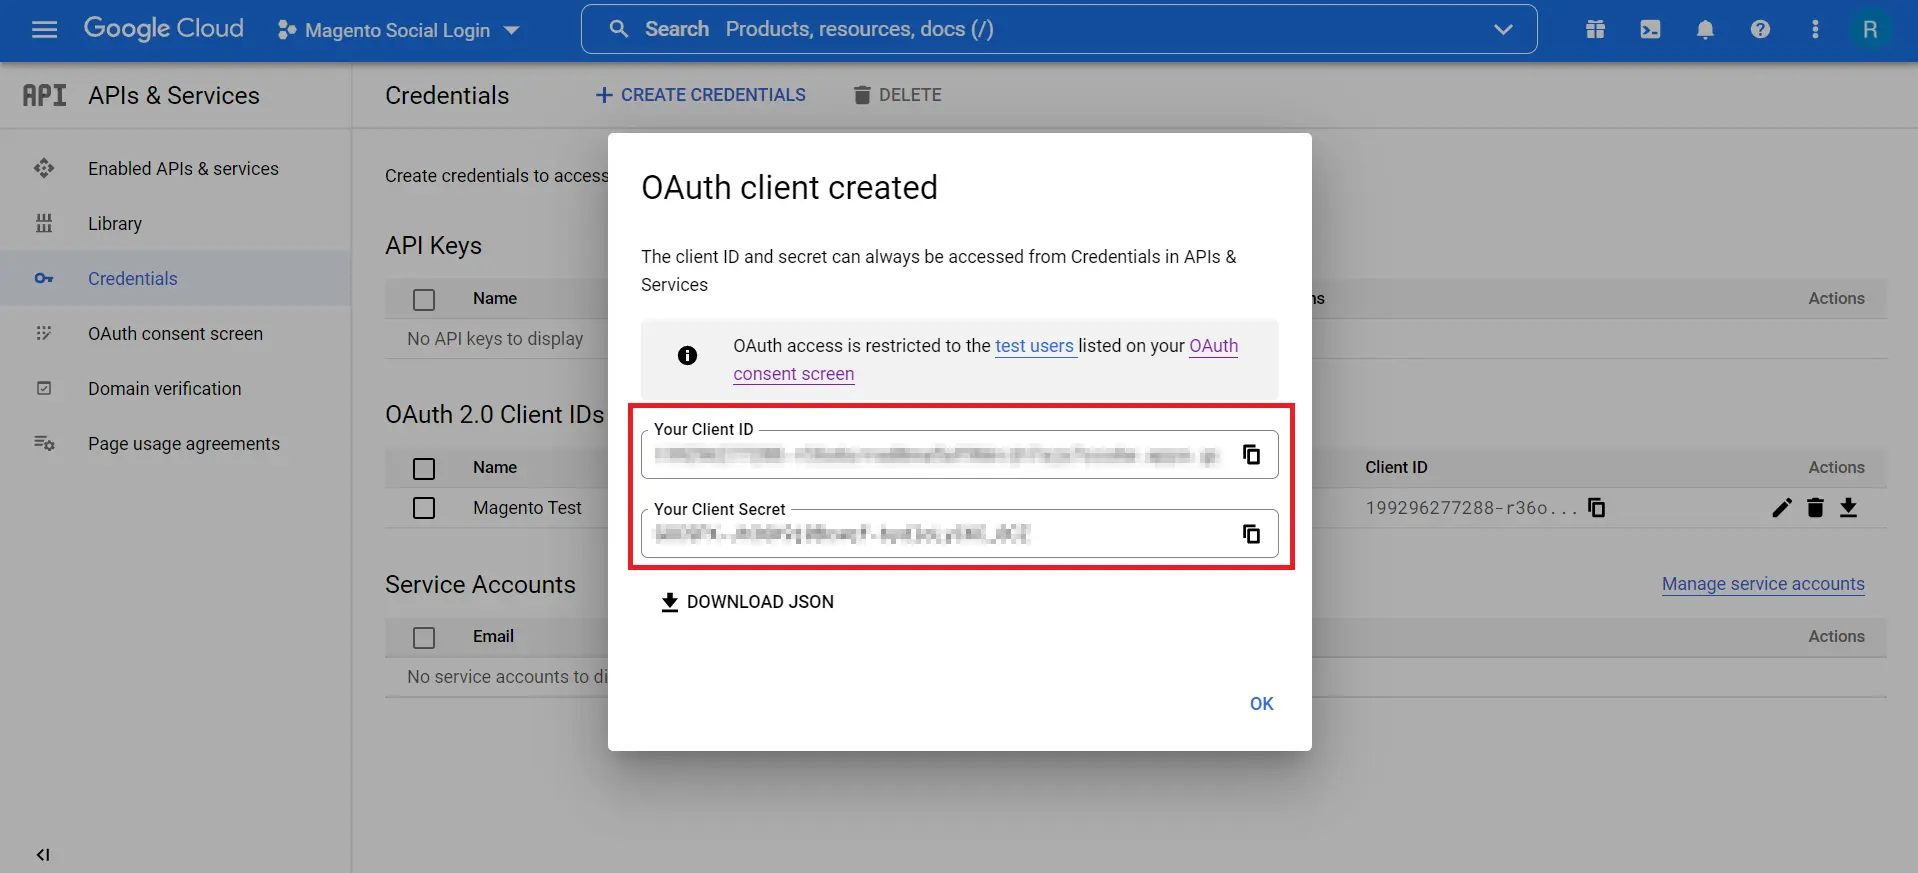 Google app client id and client secret for Magento social login